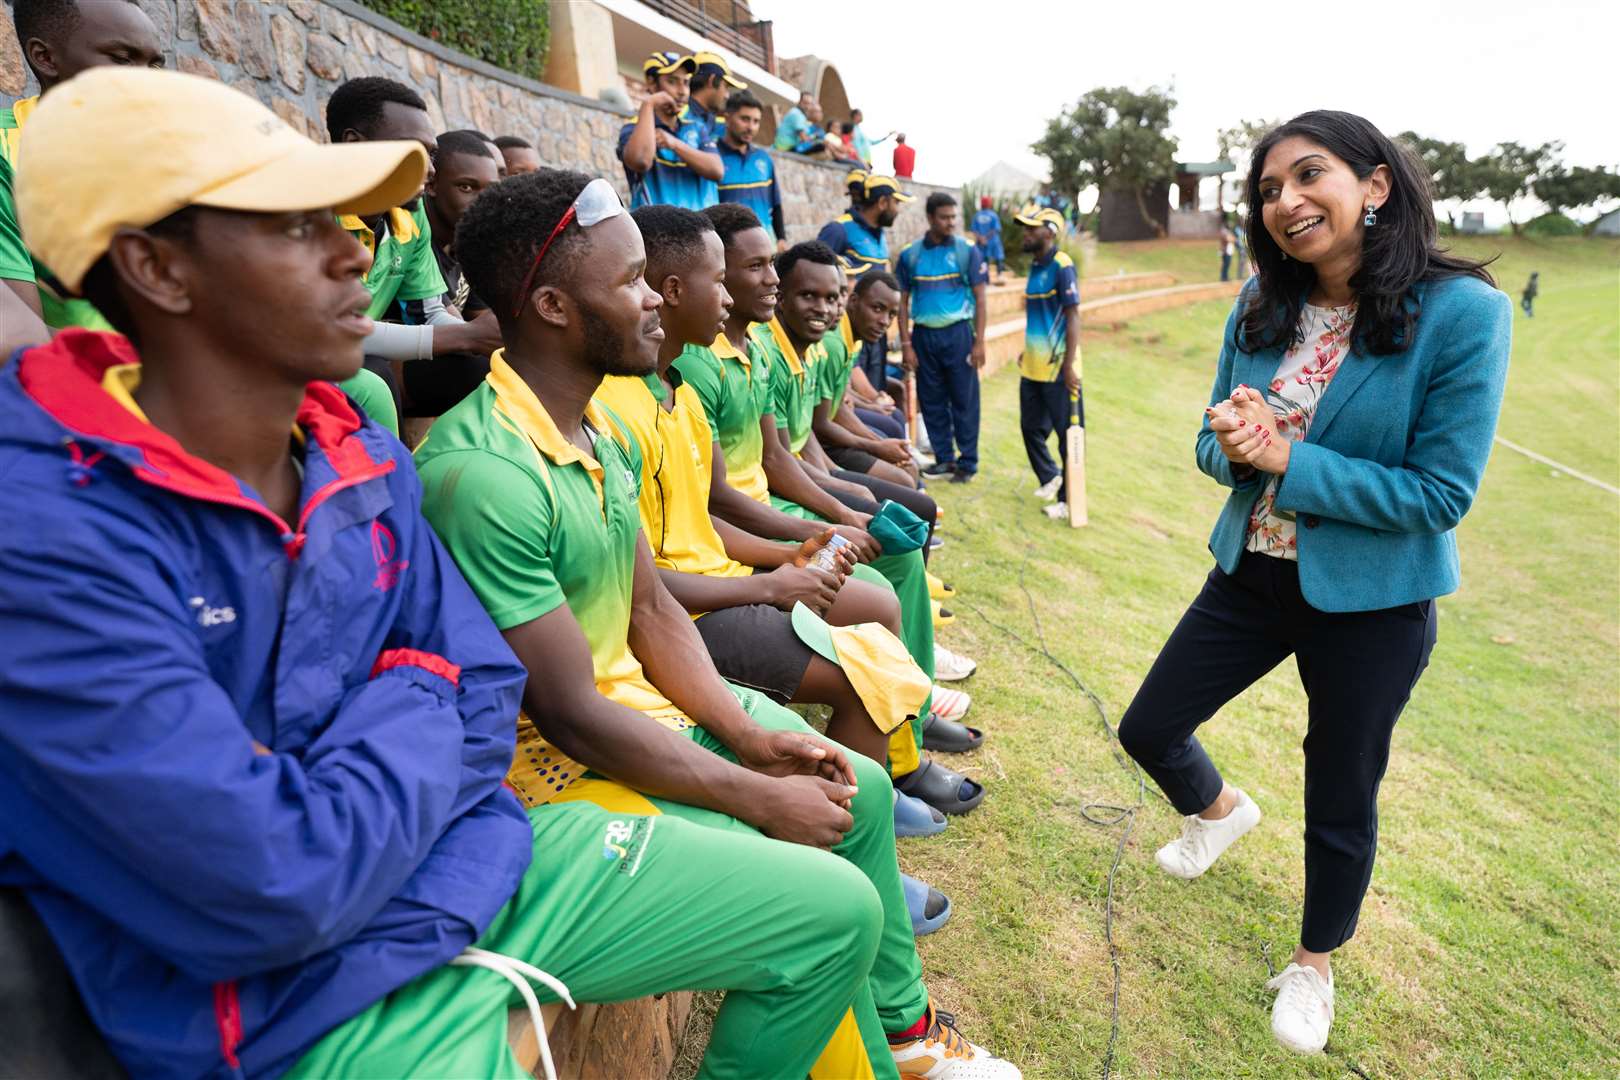 Suella Braverman meets cricketers at Gahanga International Cricket Stadium in Kigali during her visit to Rwanda (Stefan Rousseau/PA)